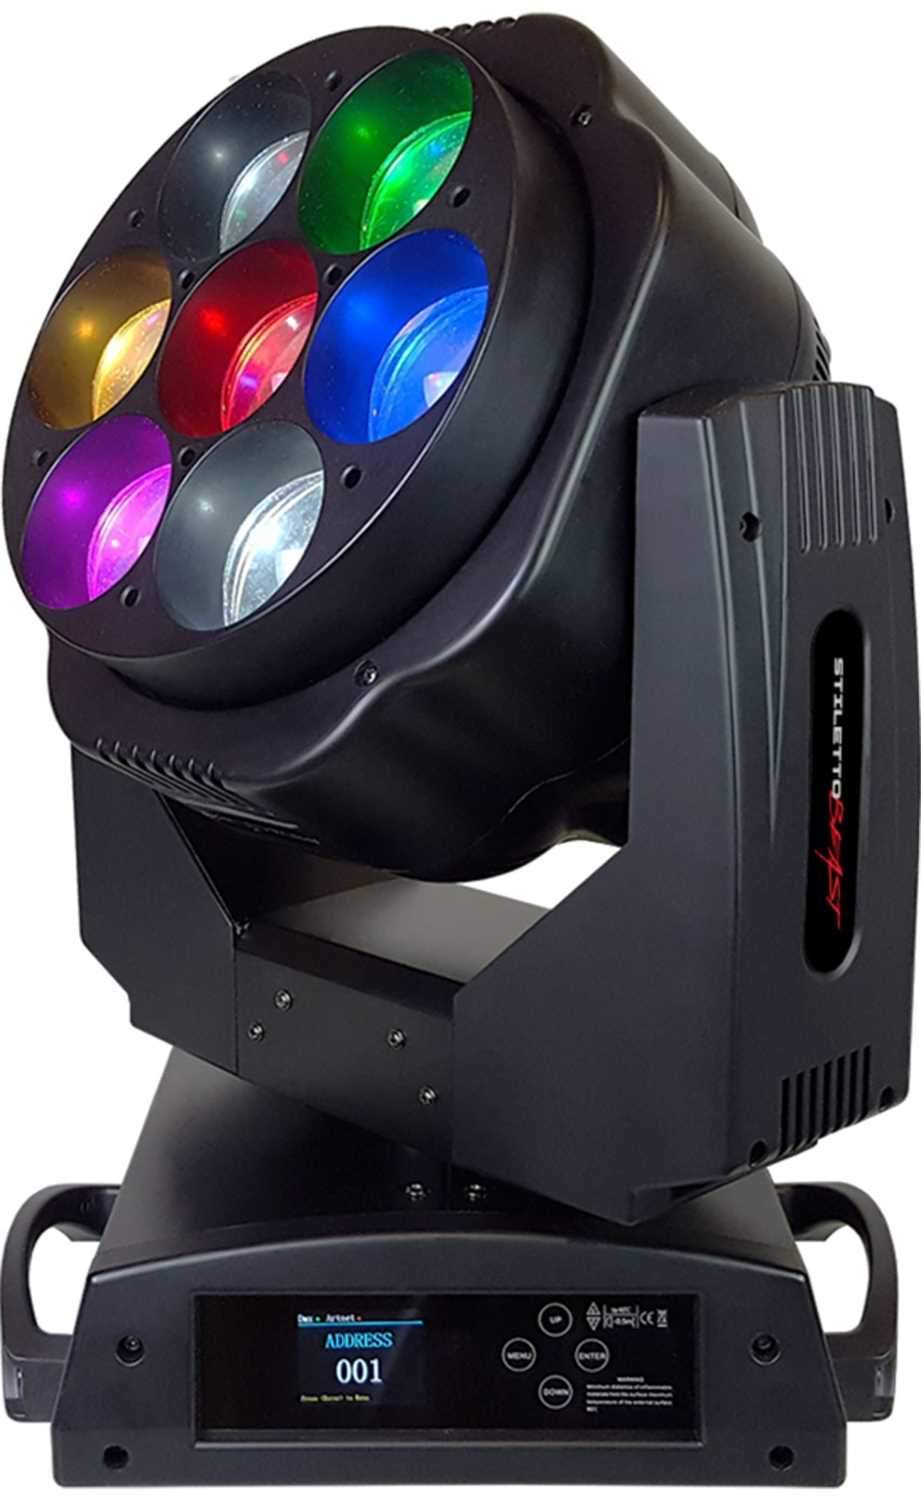 Blizzard Stiletto Beast 7x60-Watt RGBW LED Moving Head Light - PSSL ProSound and Stage Lighting